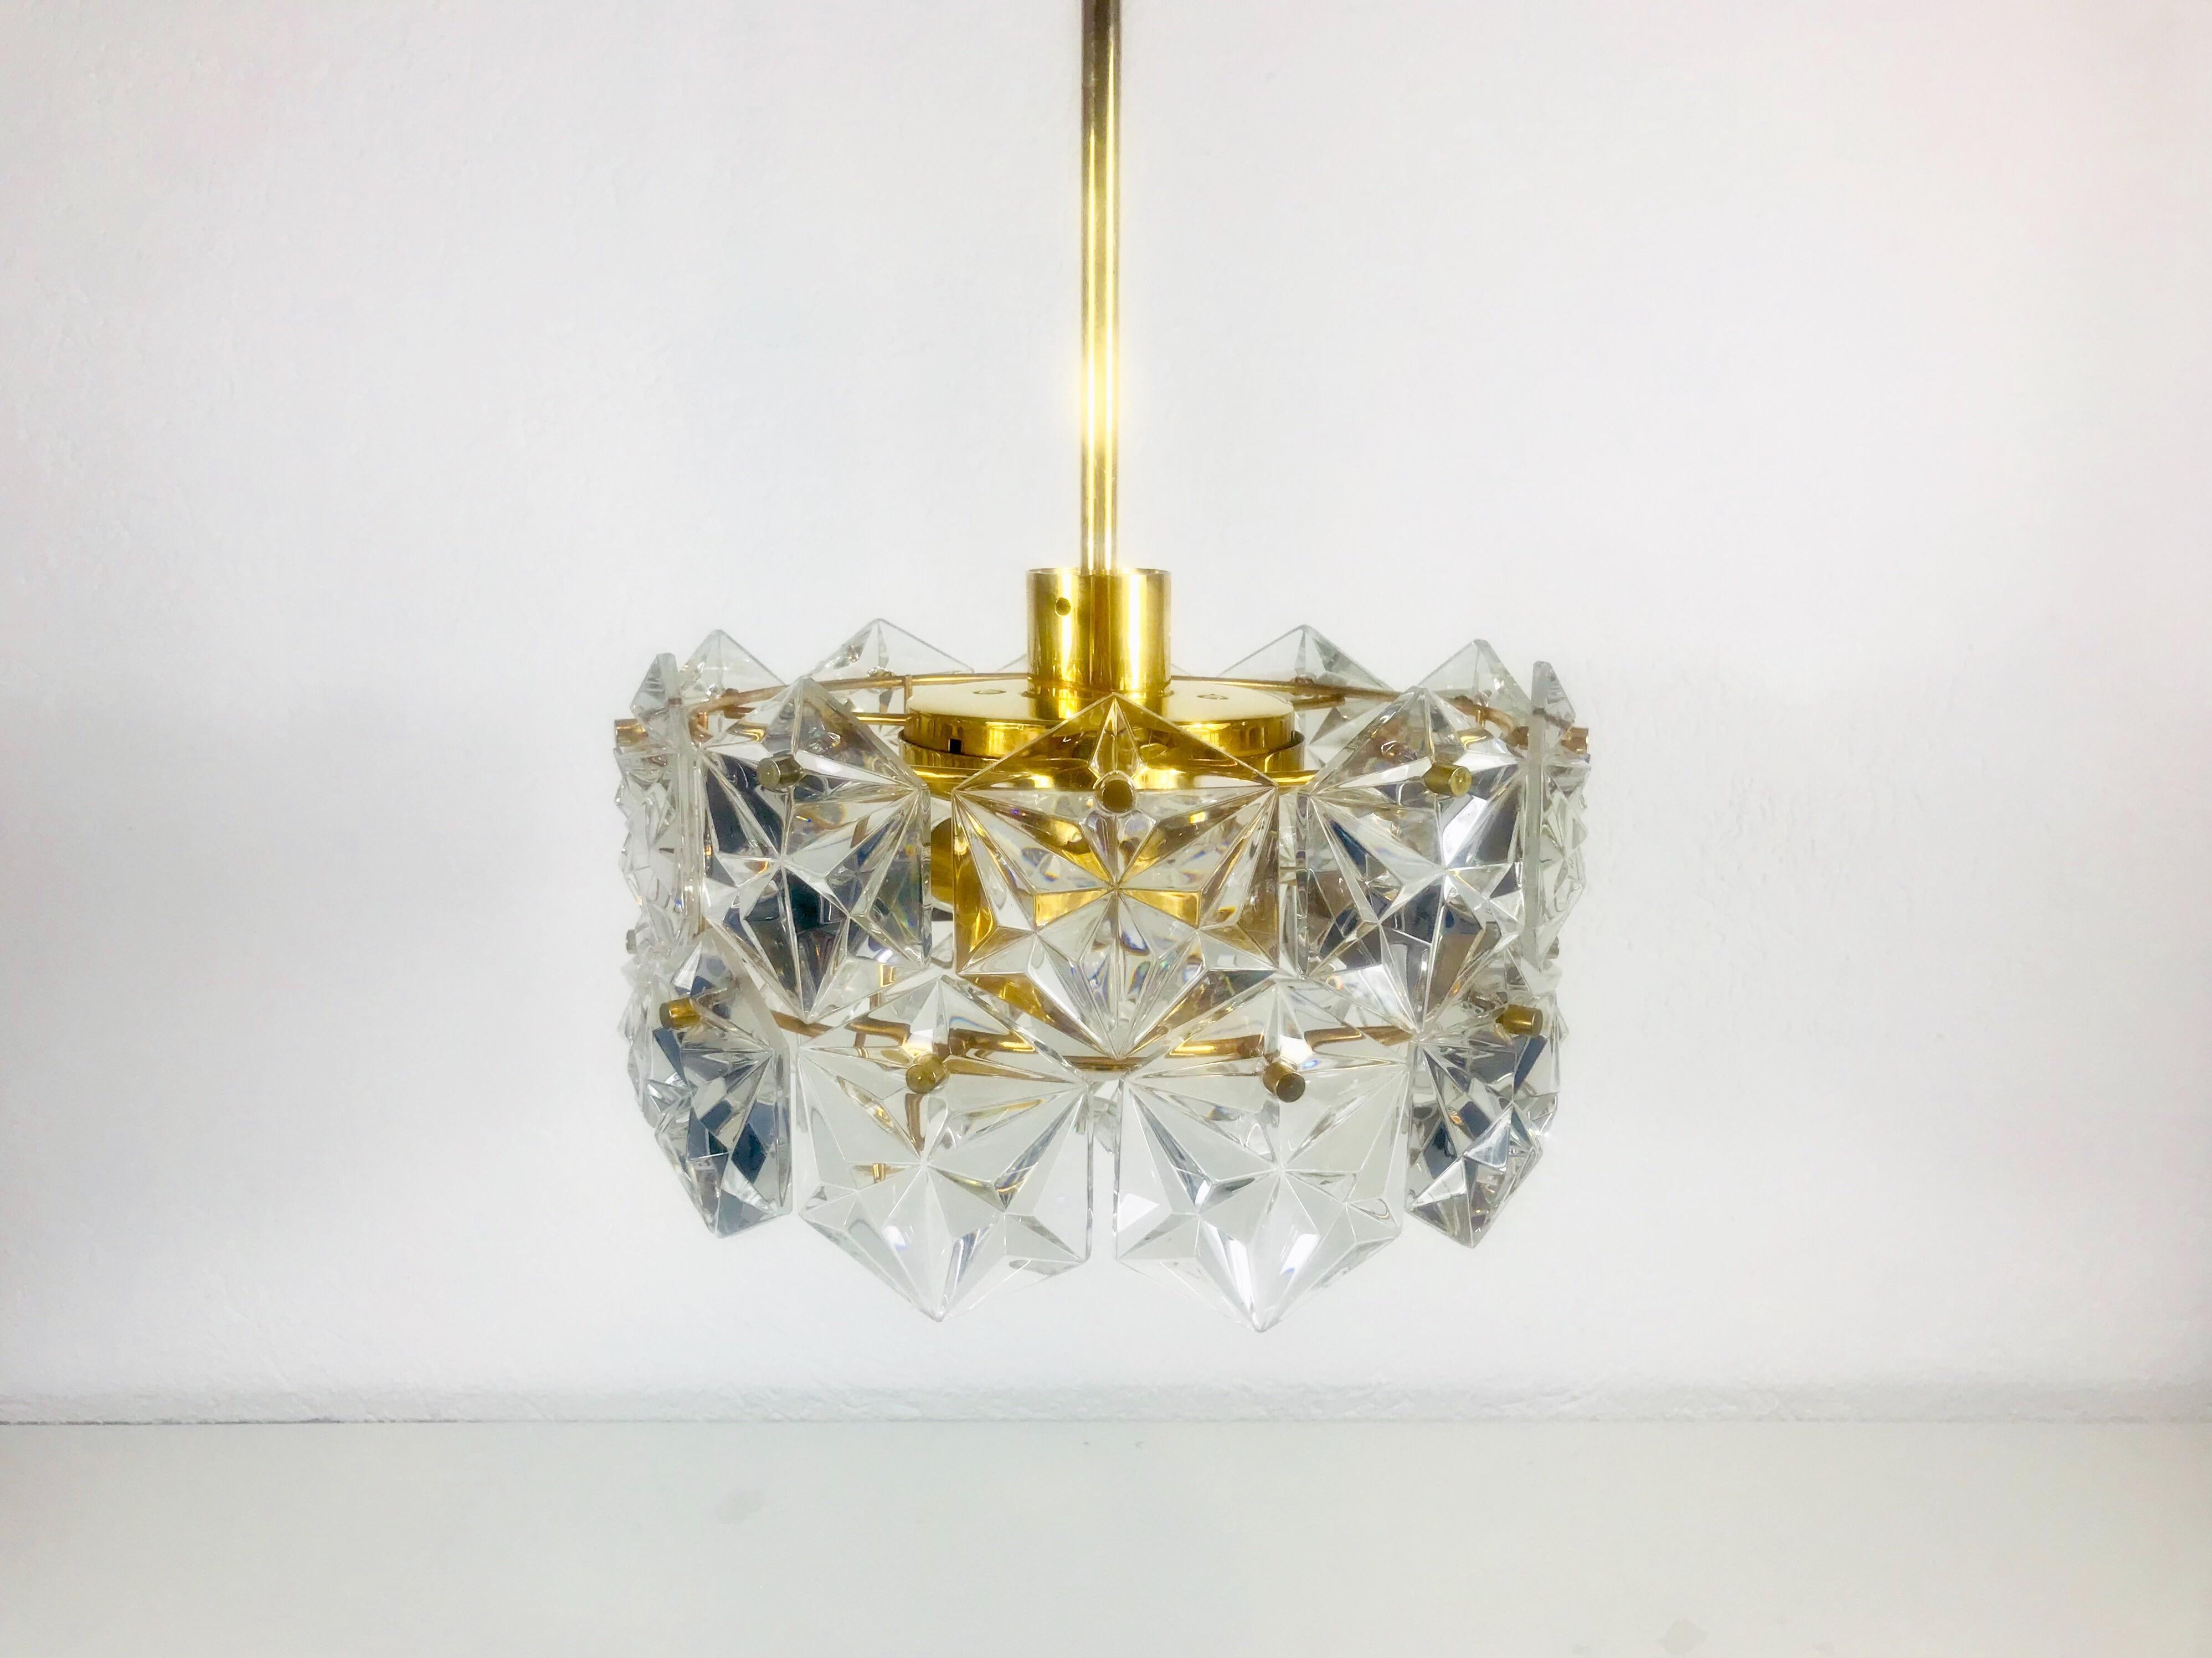 German Kinkeldey Midcentury Polished Brass and Crystal Glass Chandelier, circa 1960s For Sale